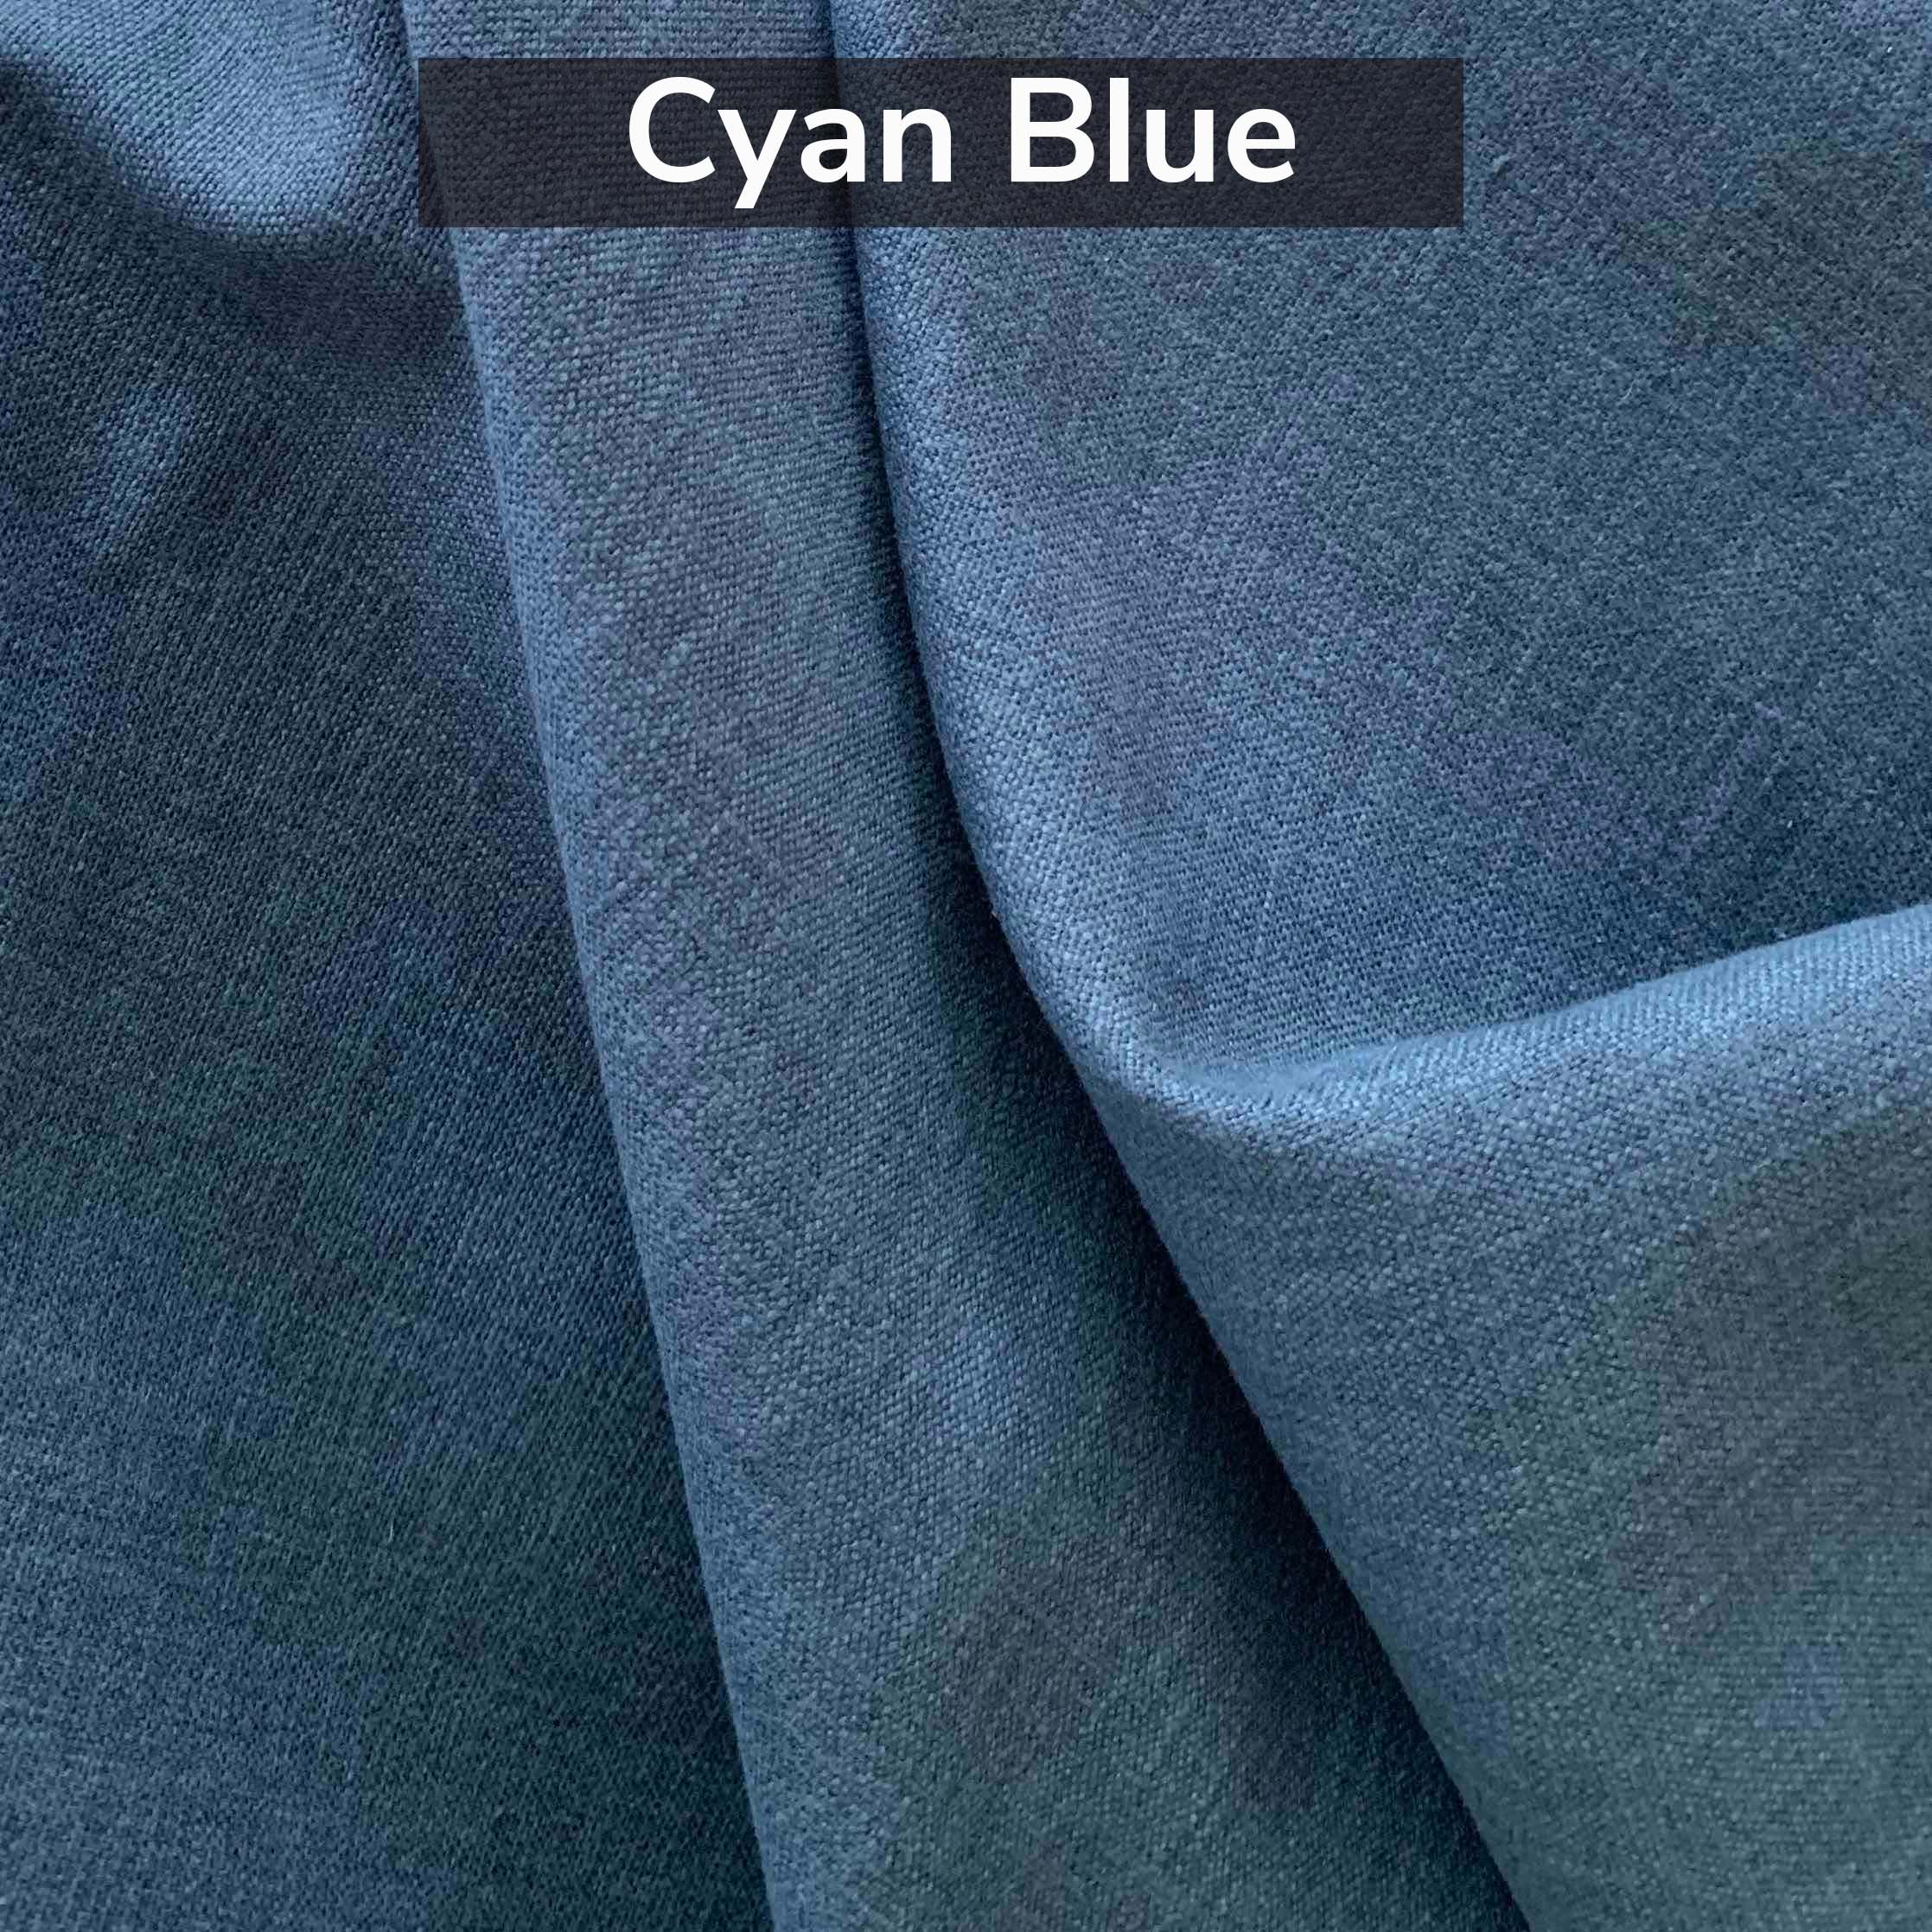 cyan-blue